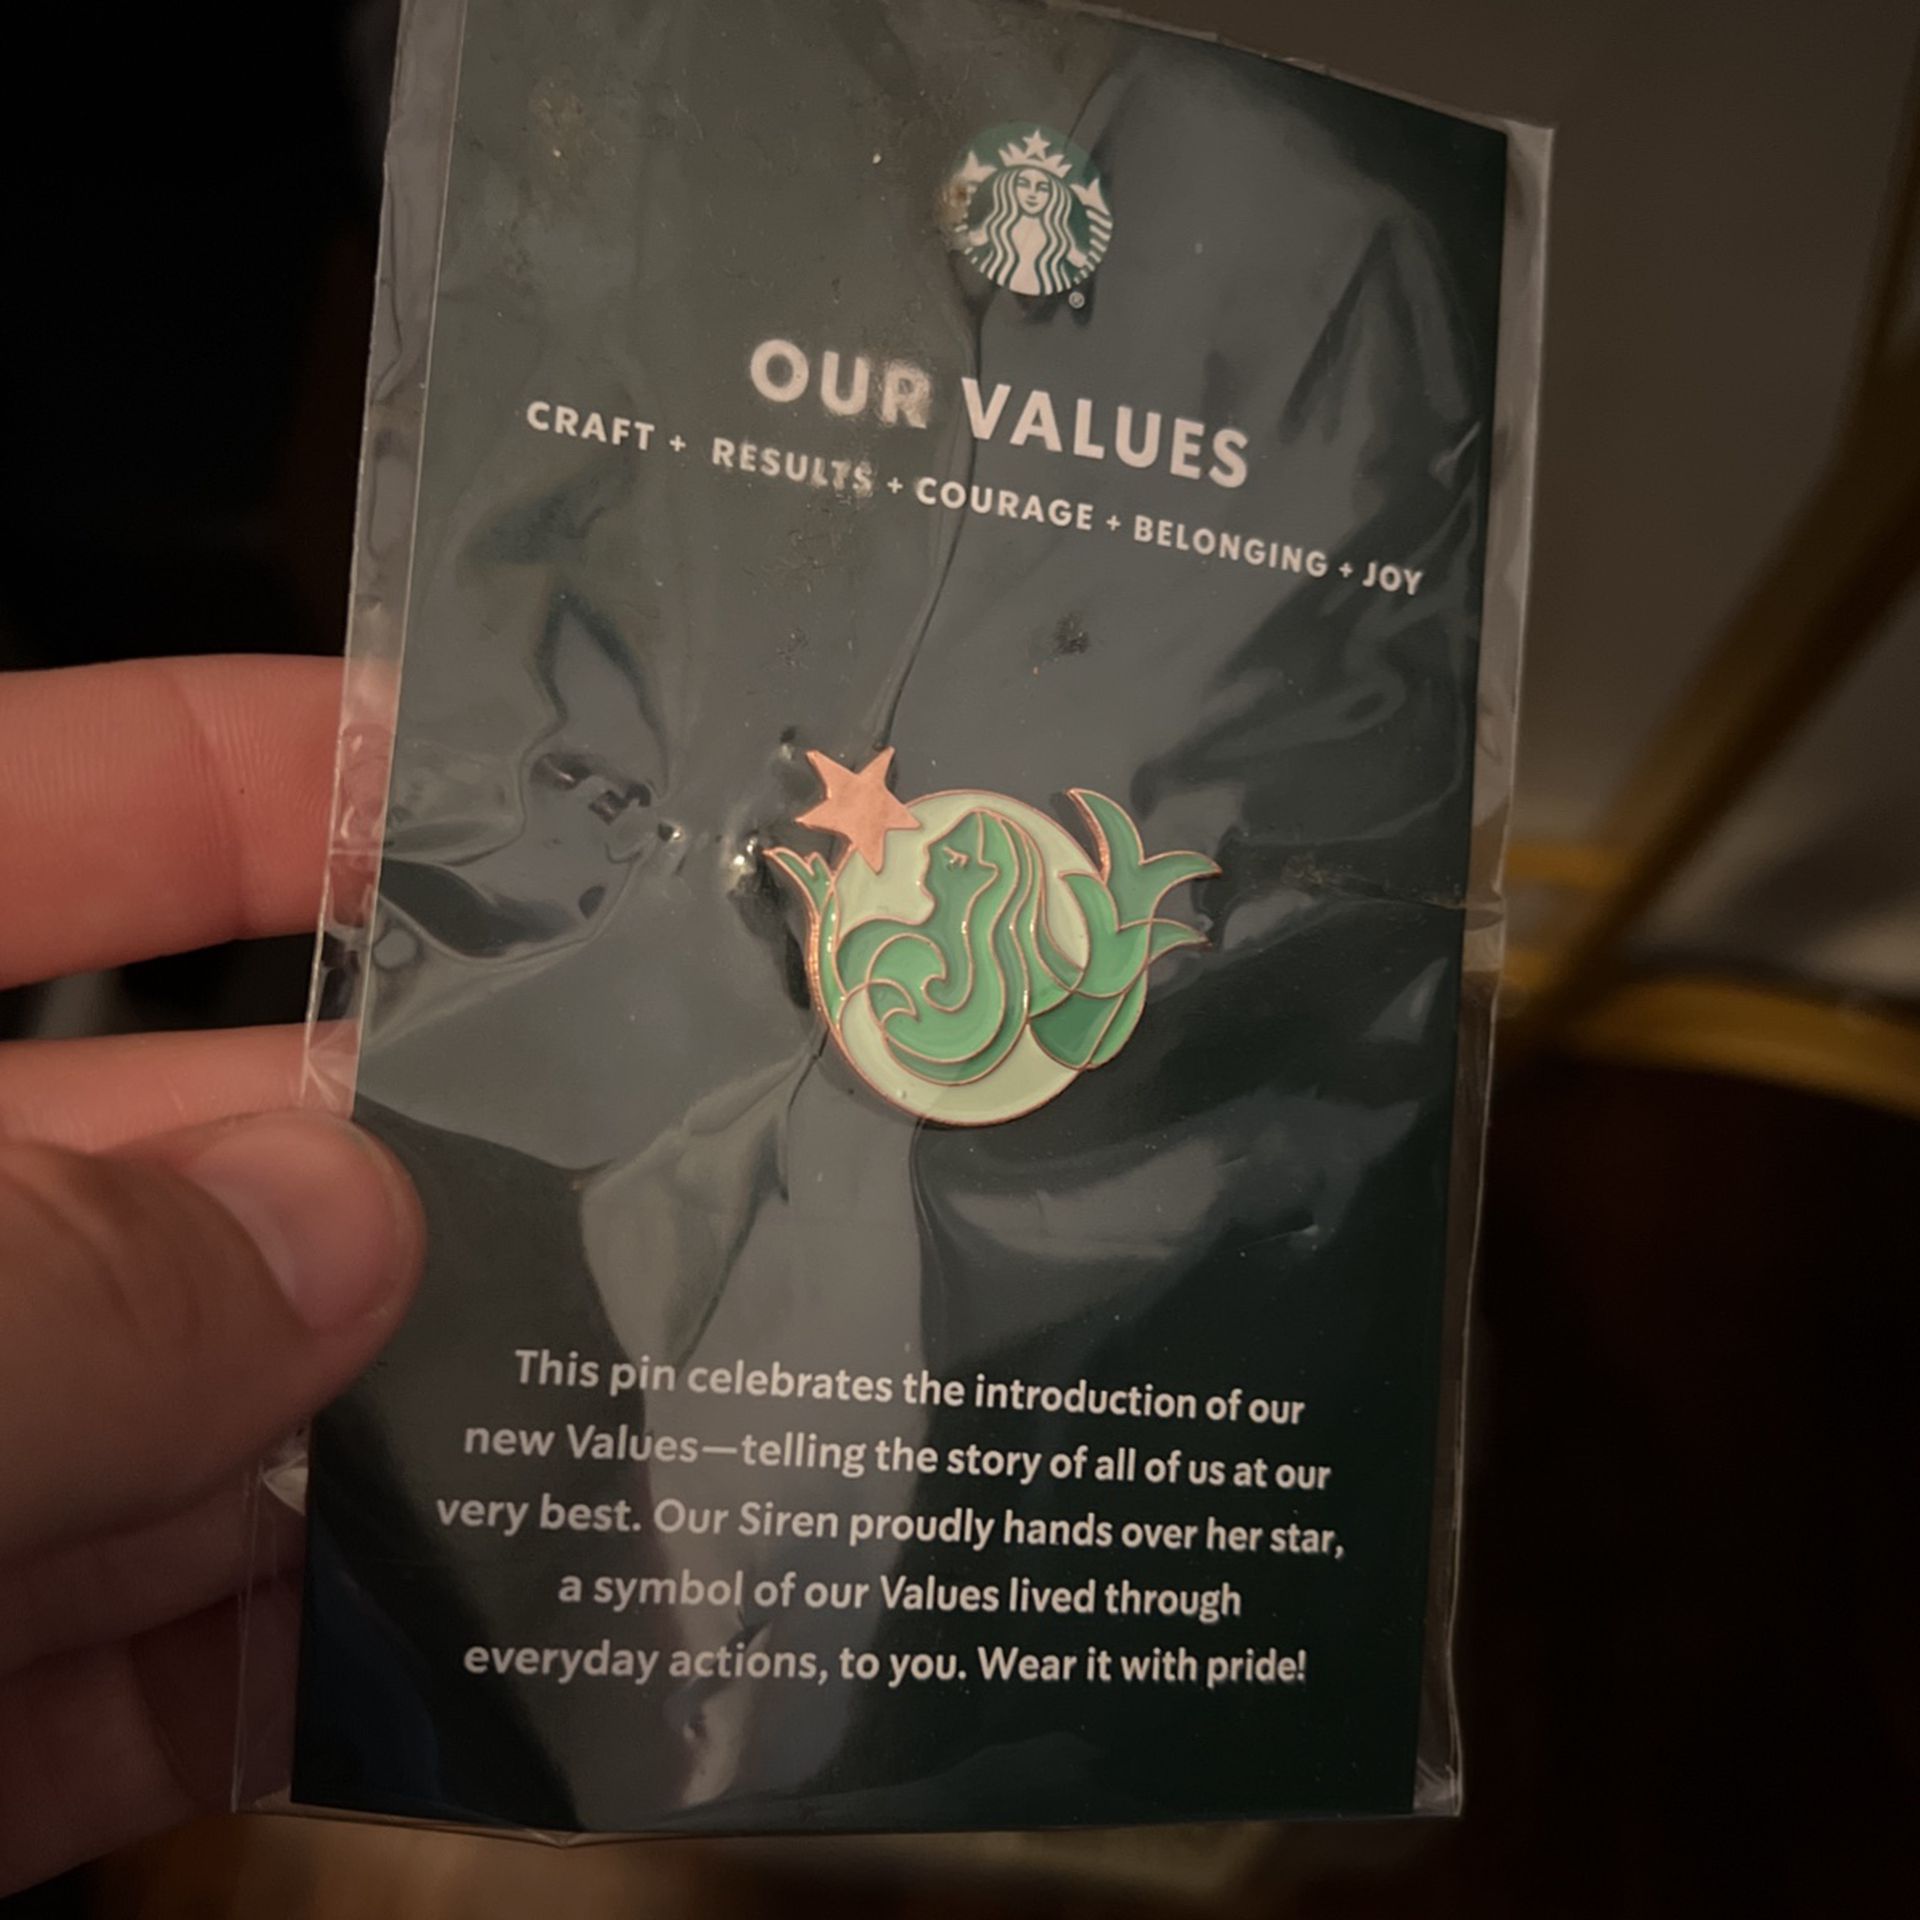 Authentic Starbucks Pin & Green Apron